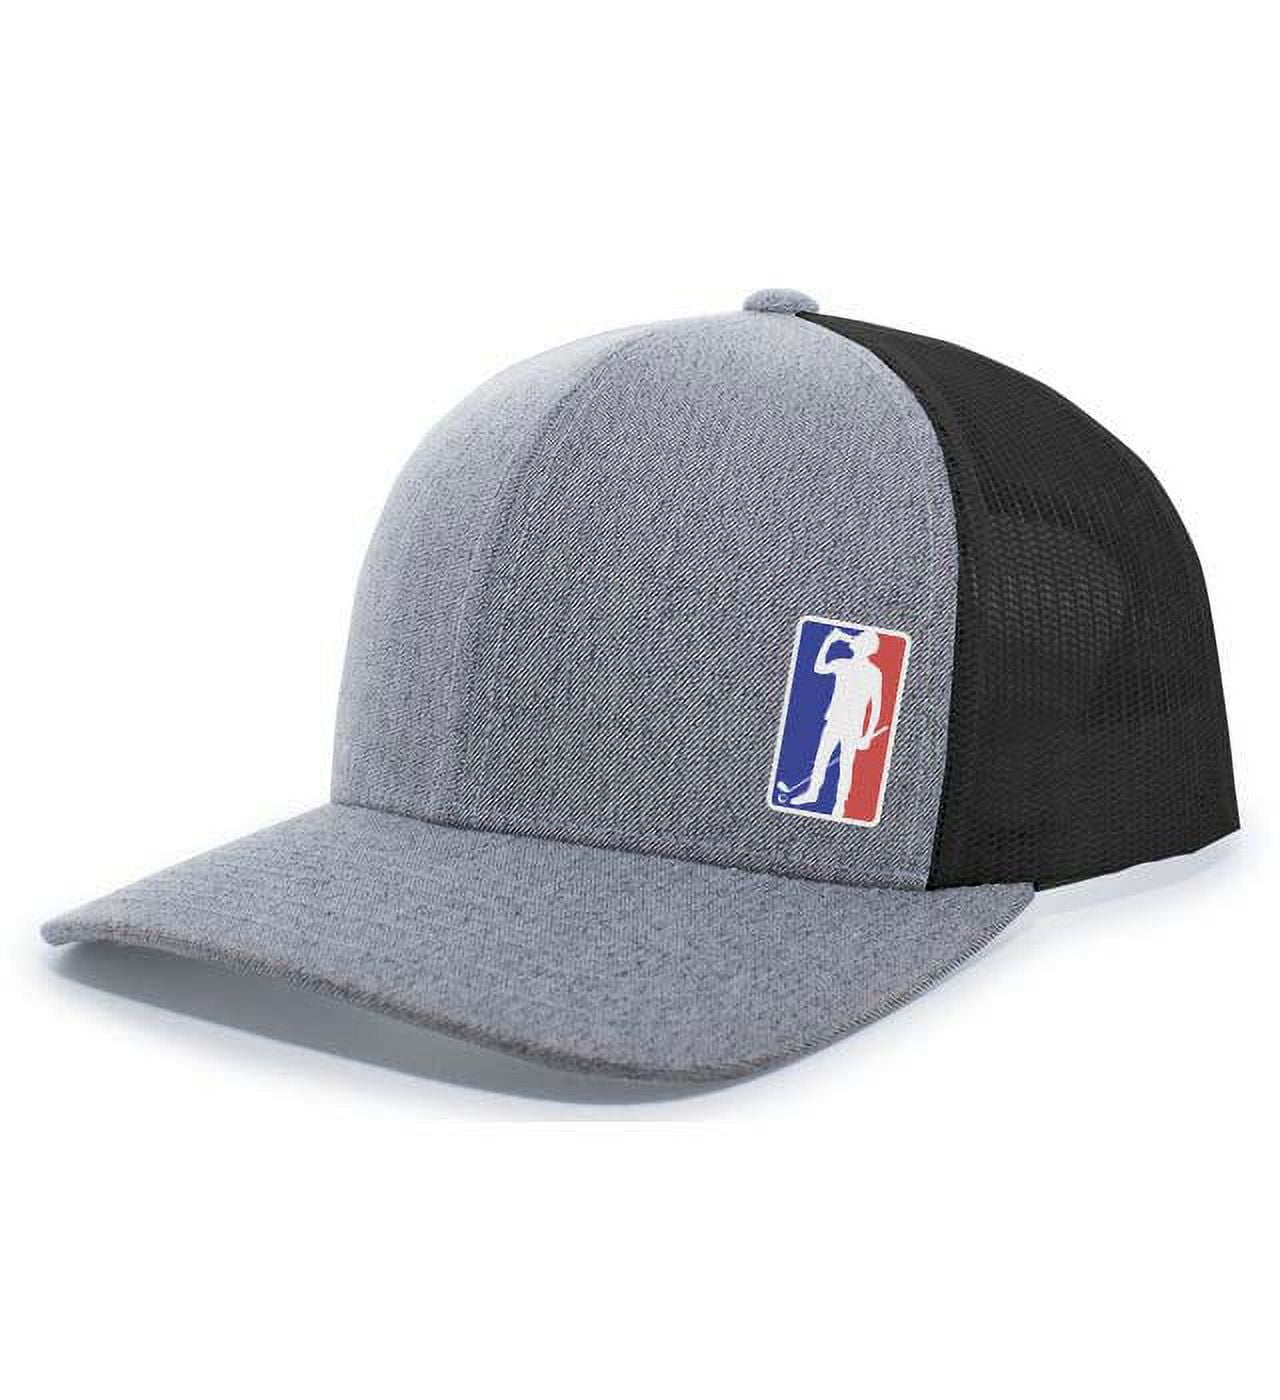 NBA Logo New Era shadow tech black cap